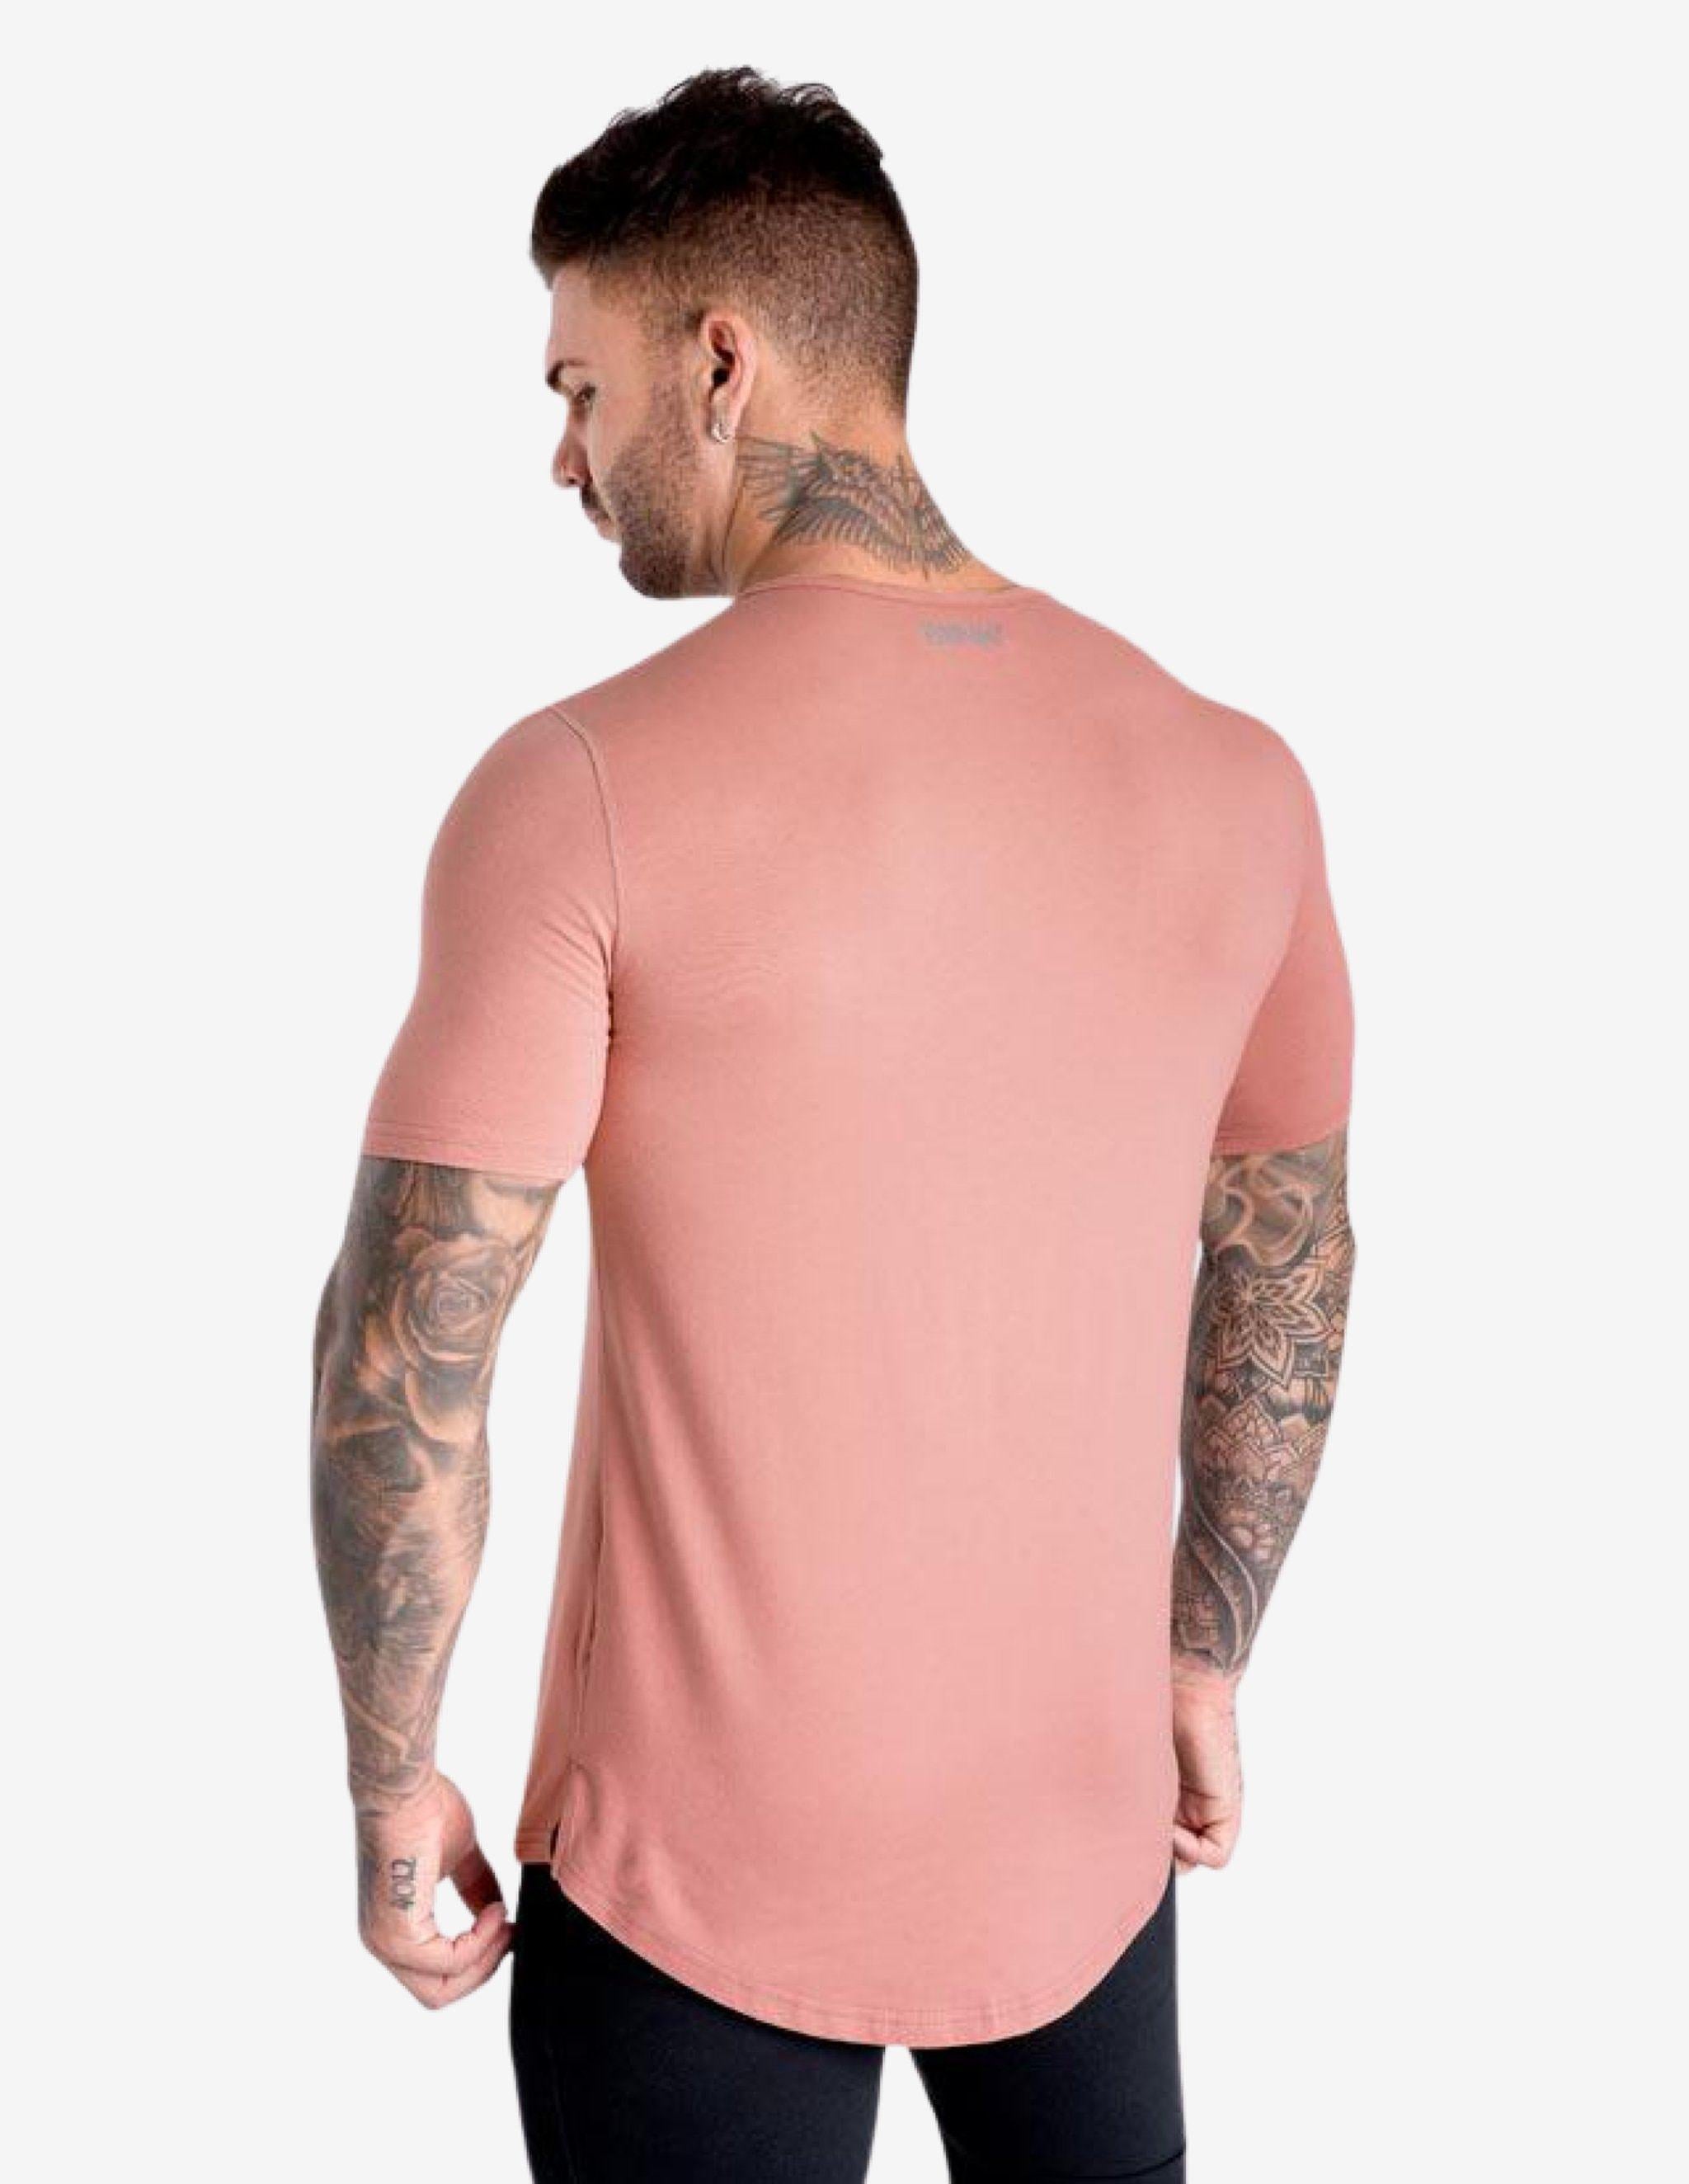 Cardinal V2 Scoop Tee - Rose Taupe-T-shirt Man-Biink Athleisure-Guru Muscle